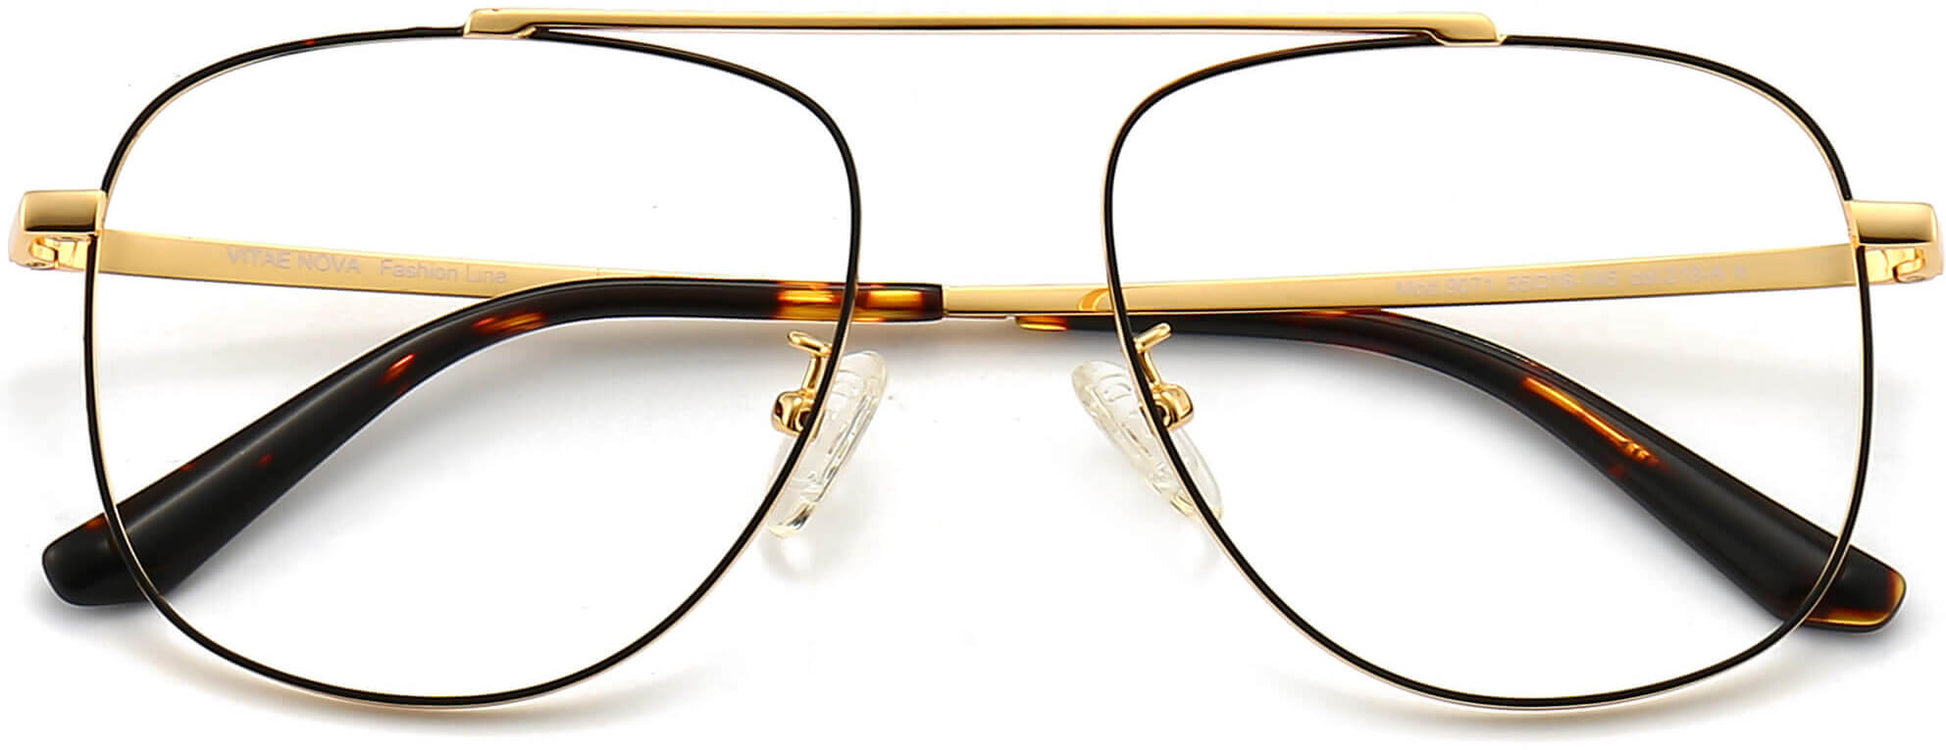 Vanessa Aviator Gold Eyeglasses from ANRRI, closed view